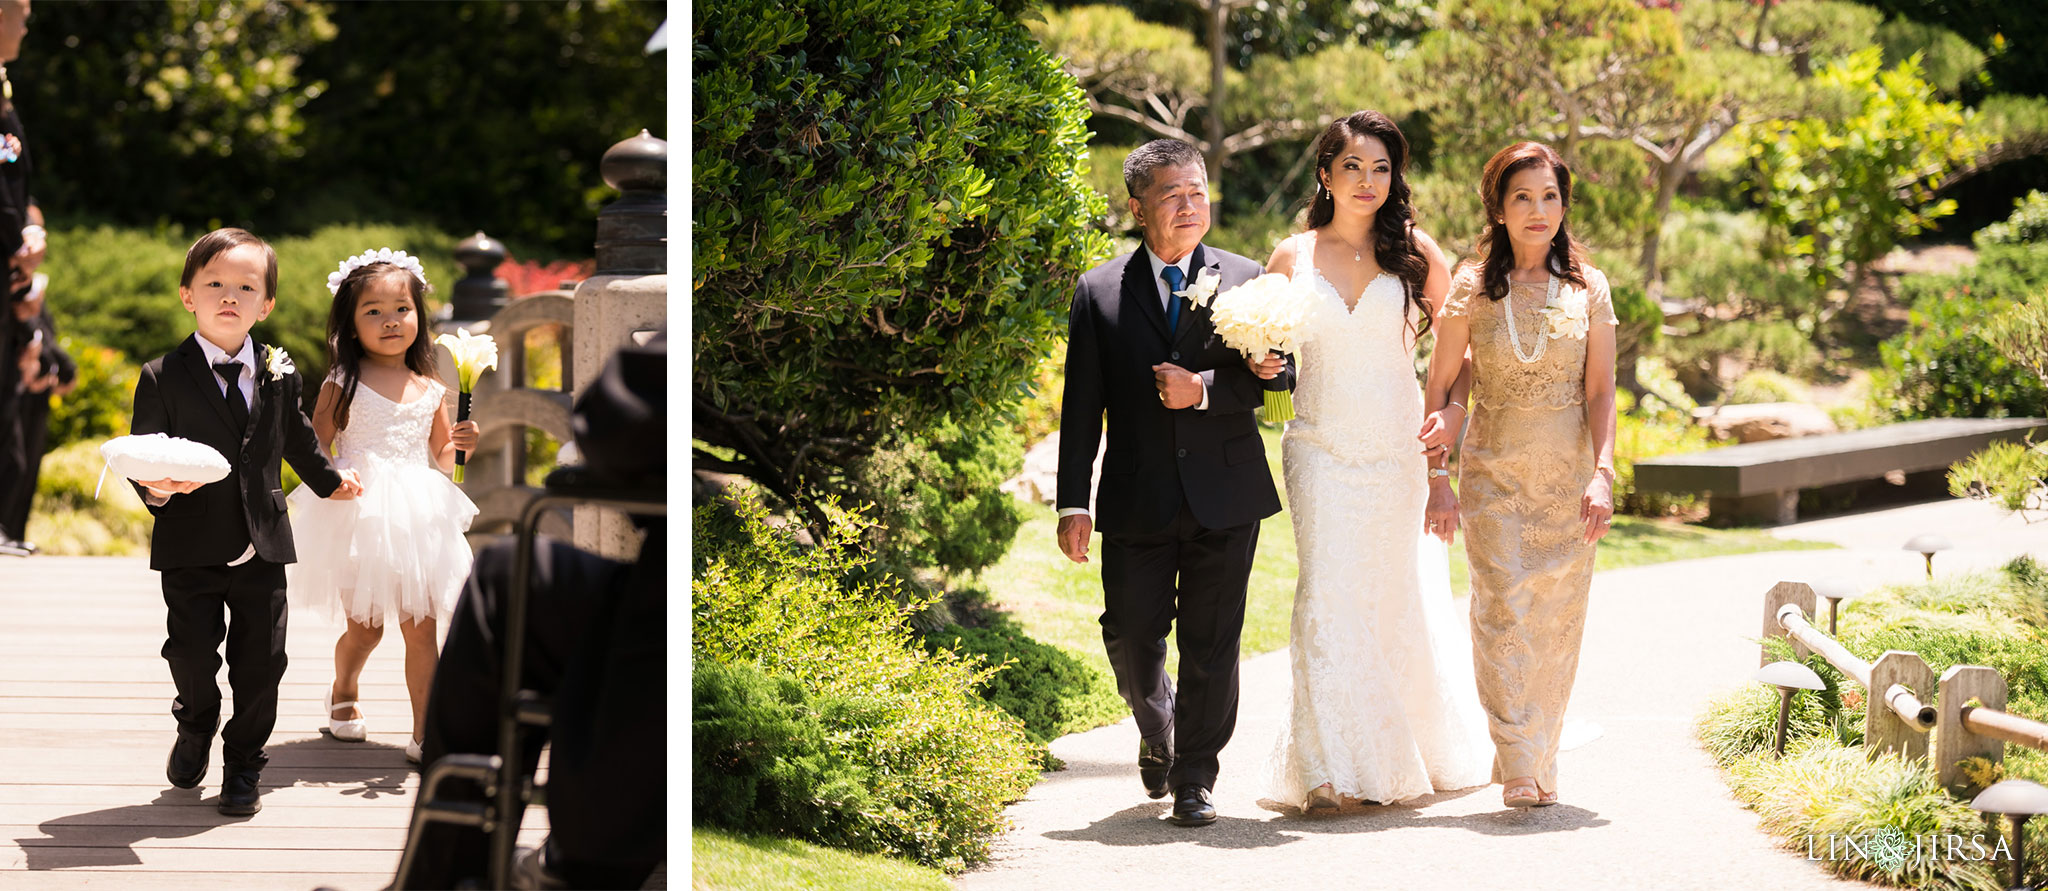 16 earl burns miller japanese gardens long beach wedding ceremony photography